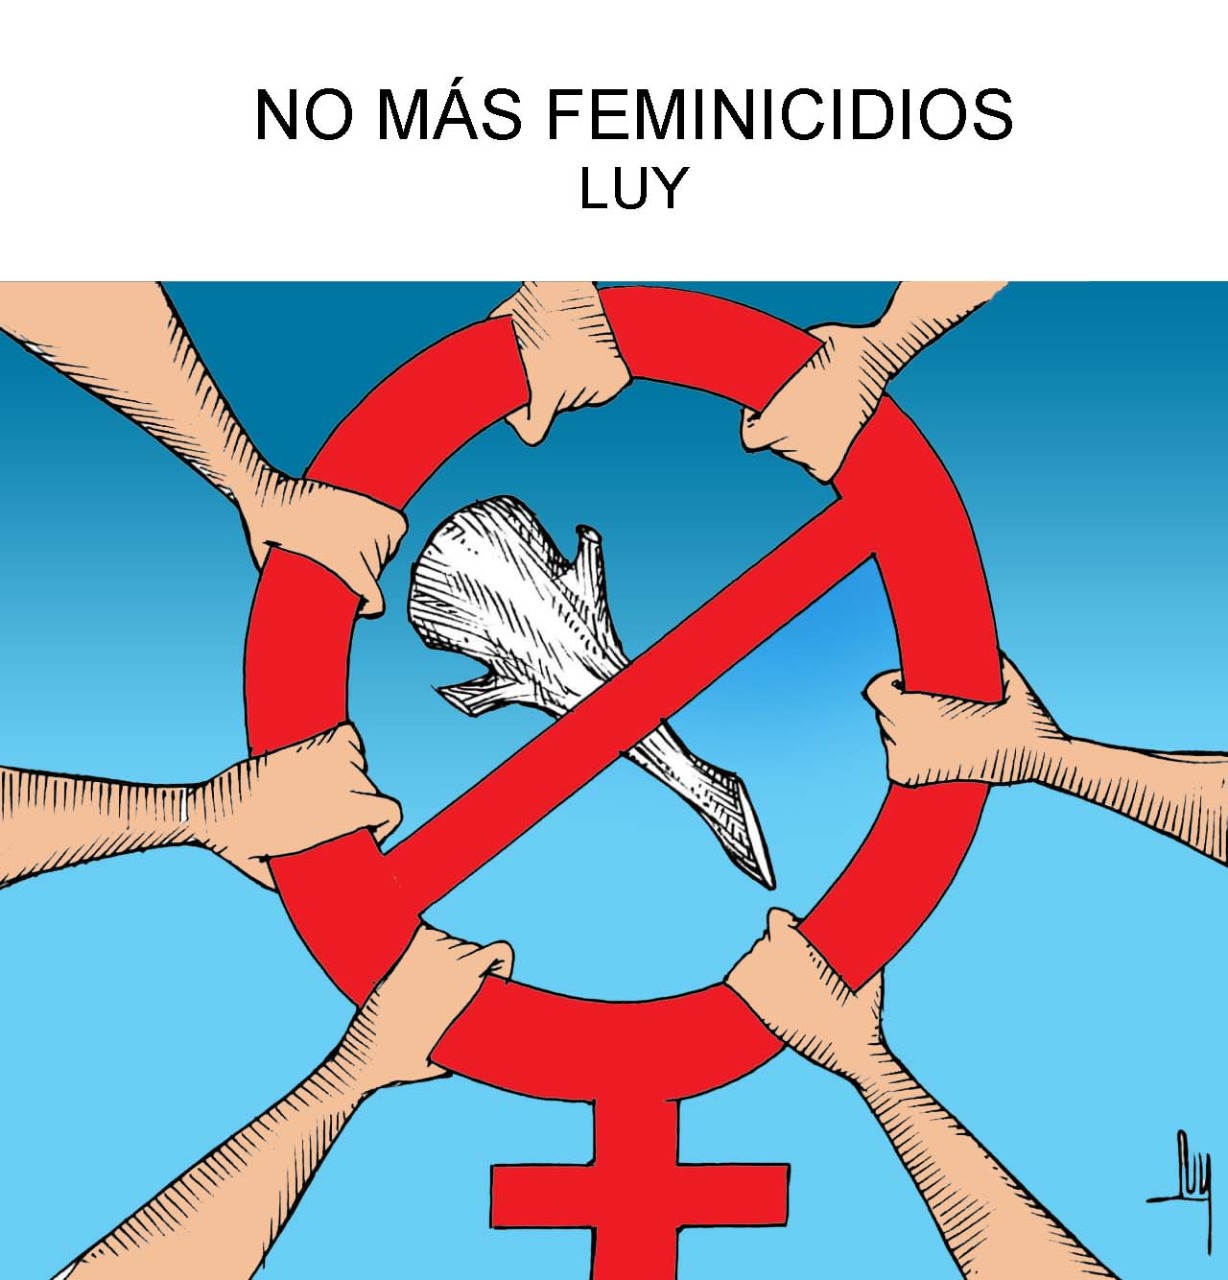 No mas feminicidios - Luy